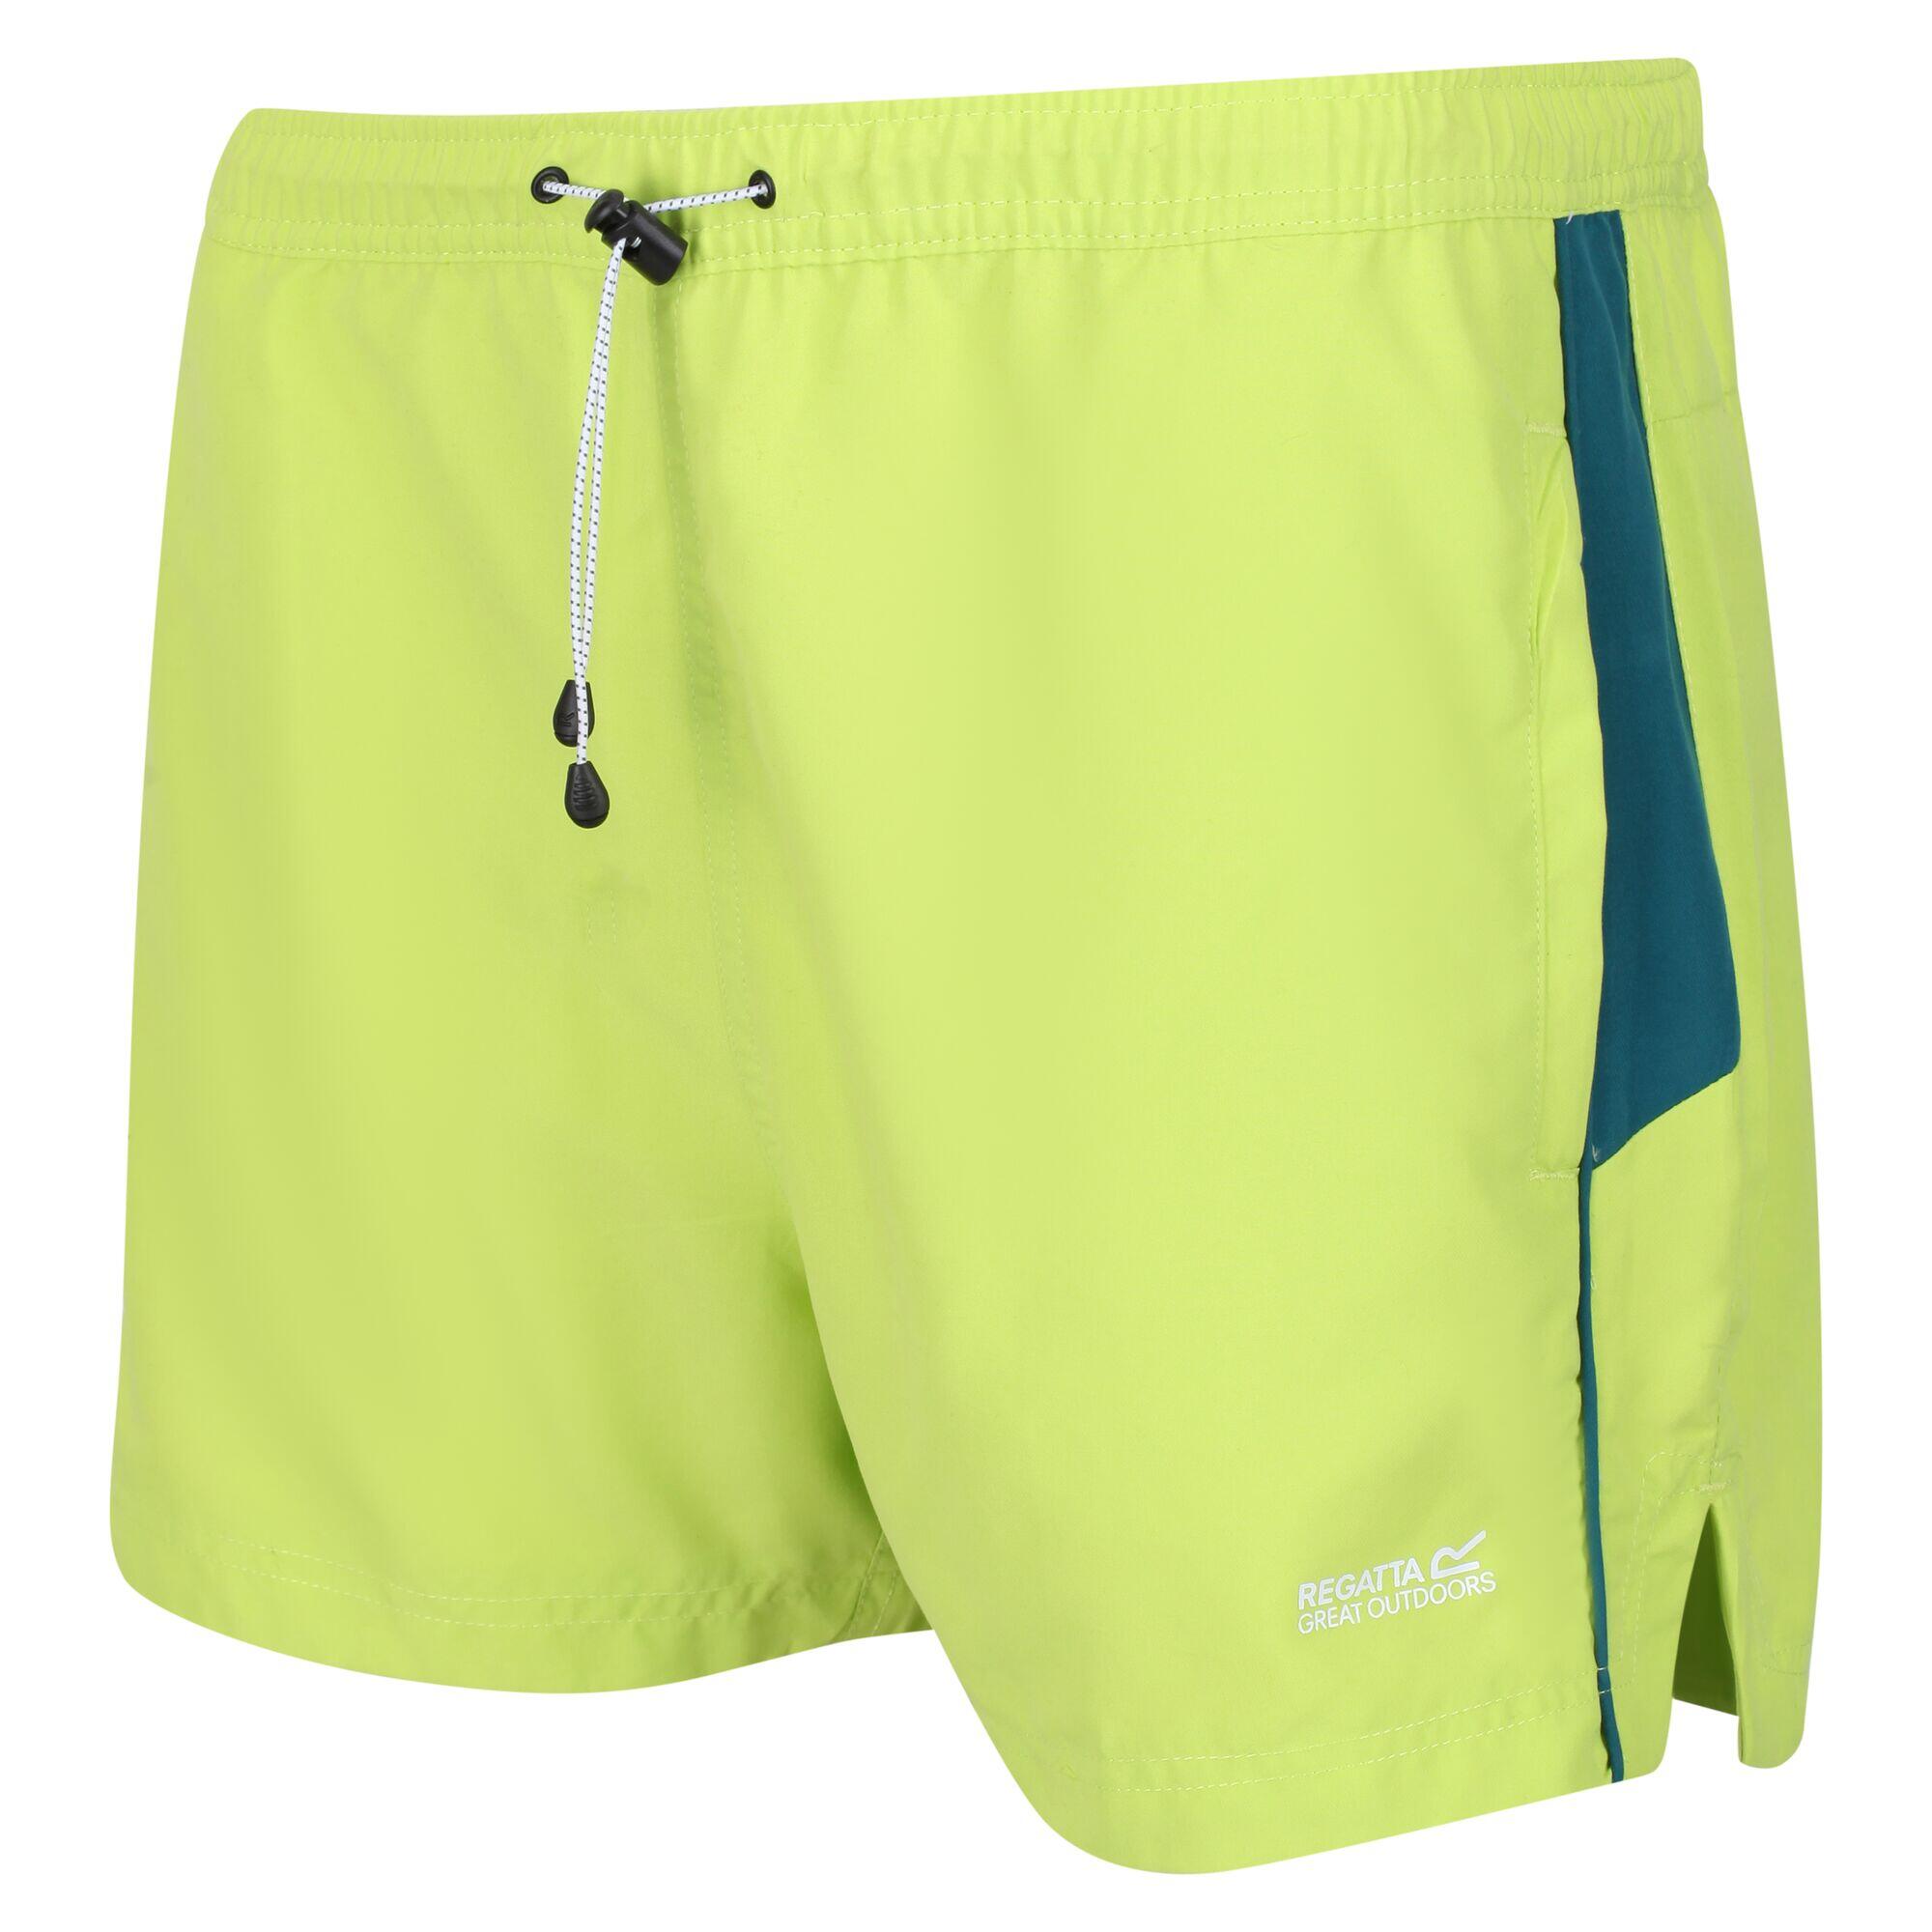 Mens Rehere Shorts (Bright Kiwi/Pacific Green) 4/5